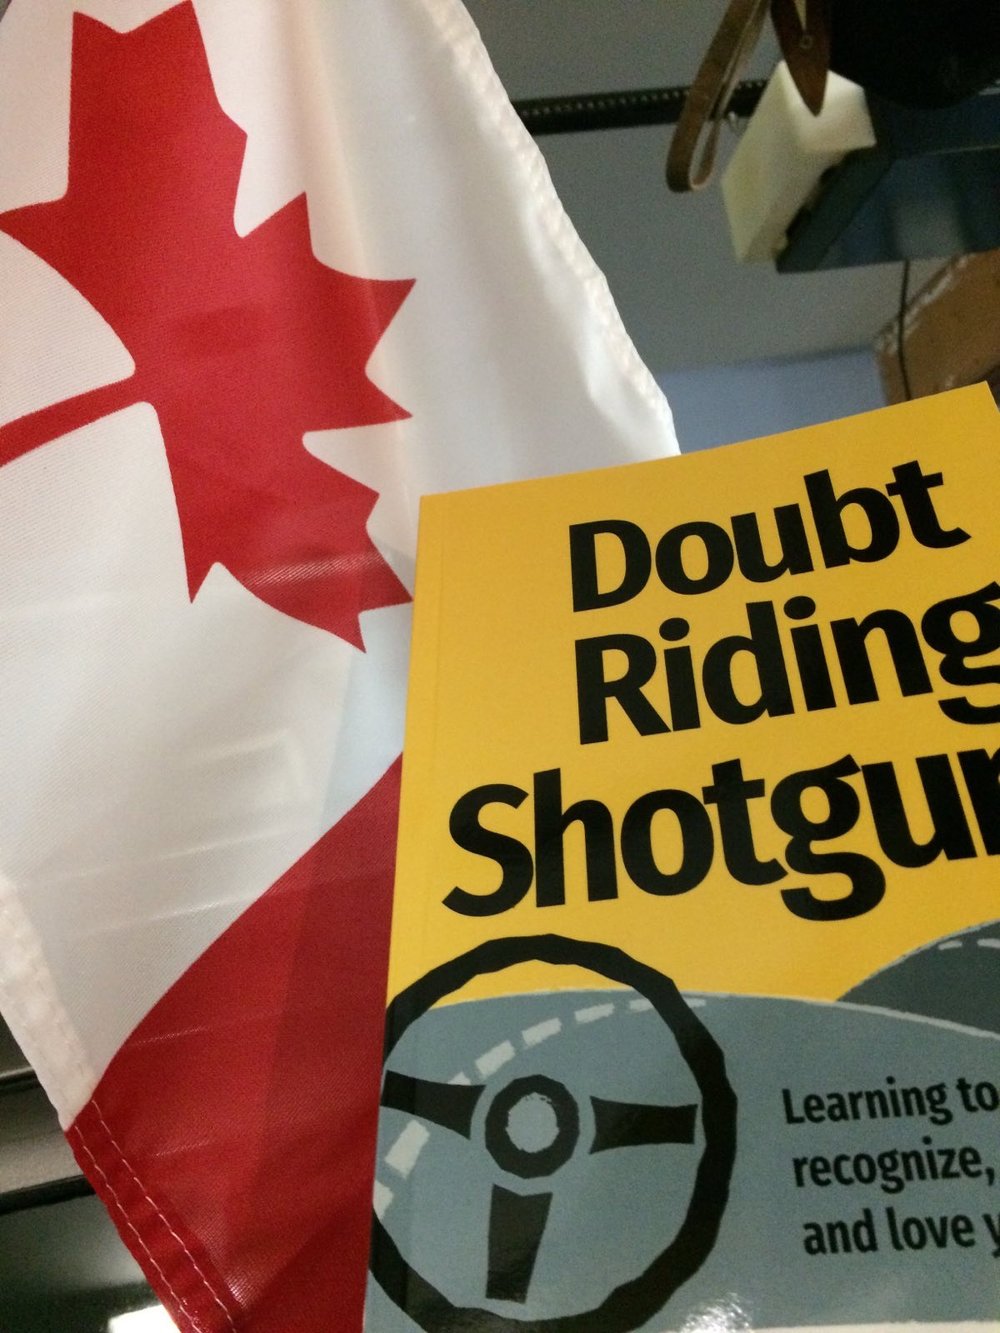 Doubt-Riding-Shotgun-arrives-in-Canada.jpeg